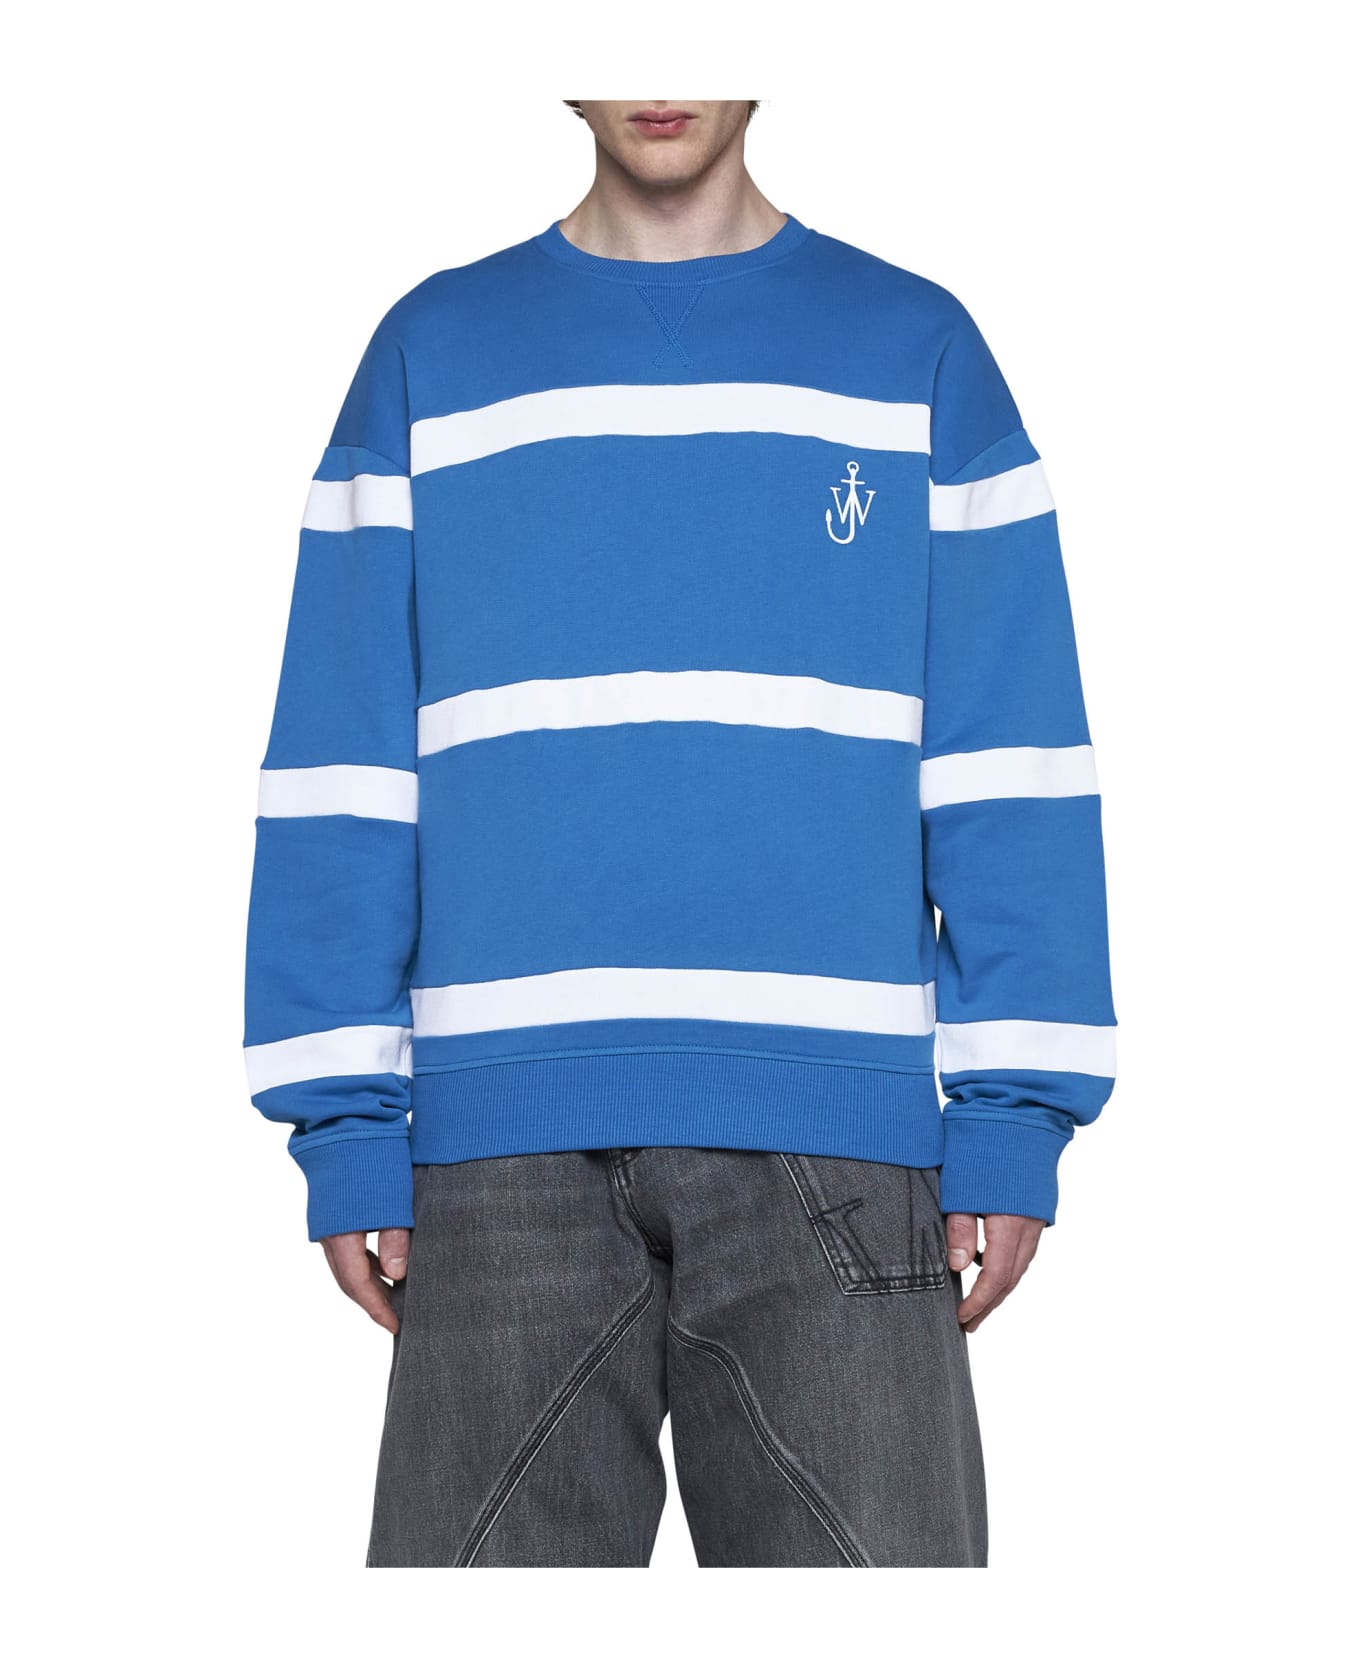 J.W. Anderson Sweater - Blue